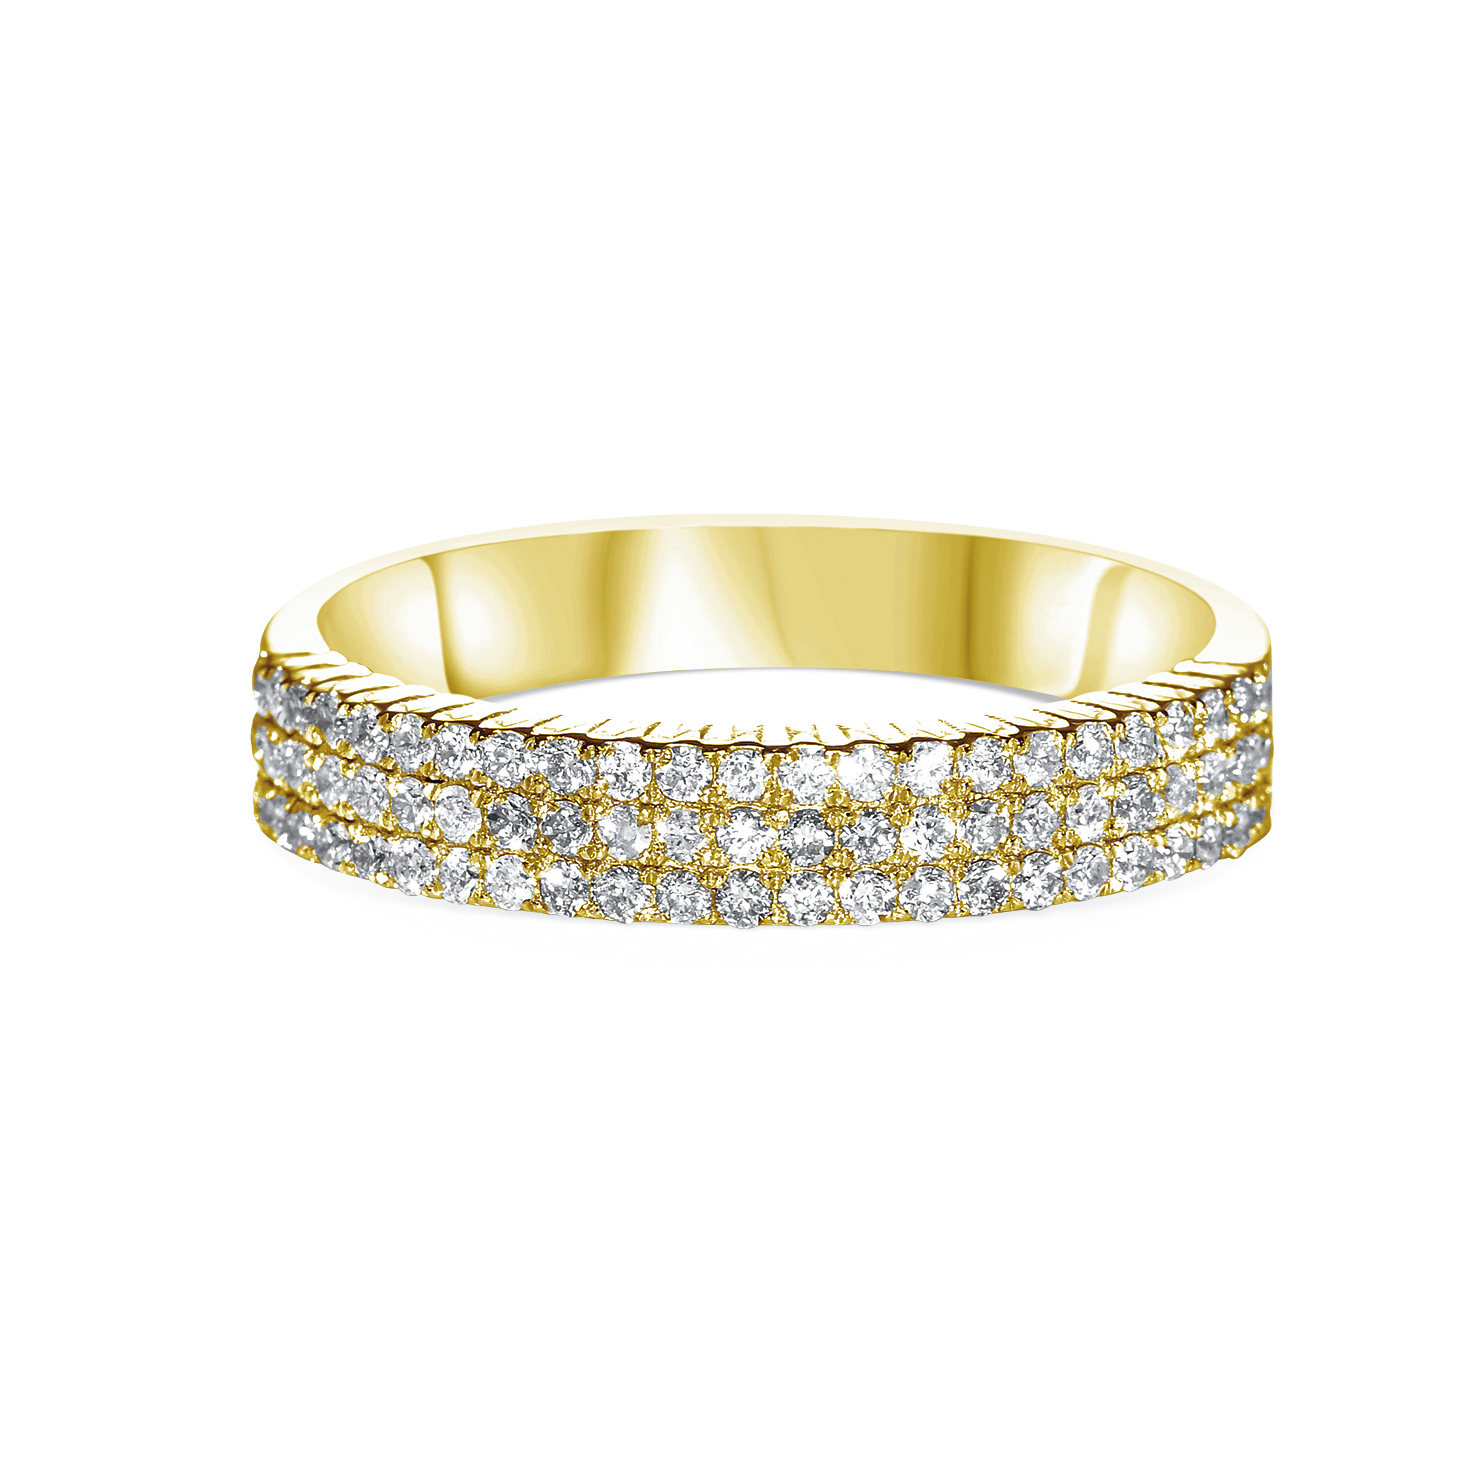 Eternity Ring in 14K Yellow Gold with 0.70 carat Diamonds - יהלומי הבורסה